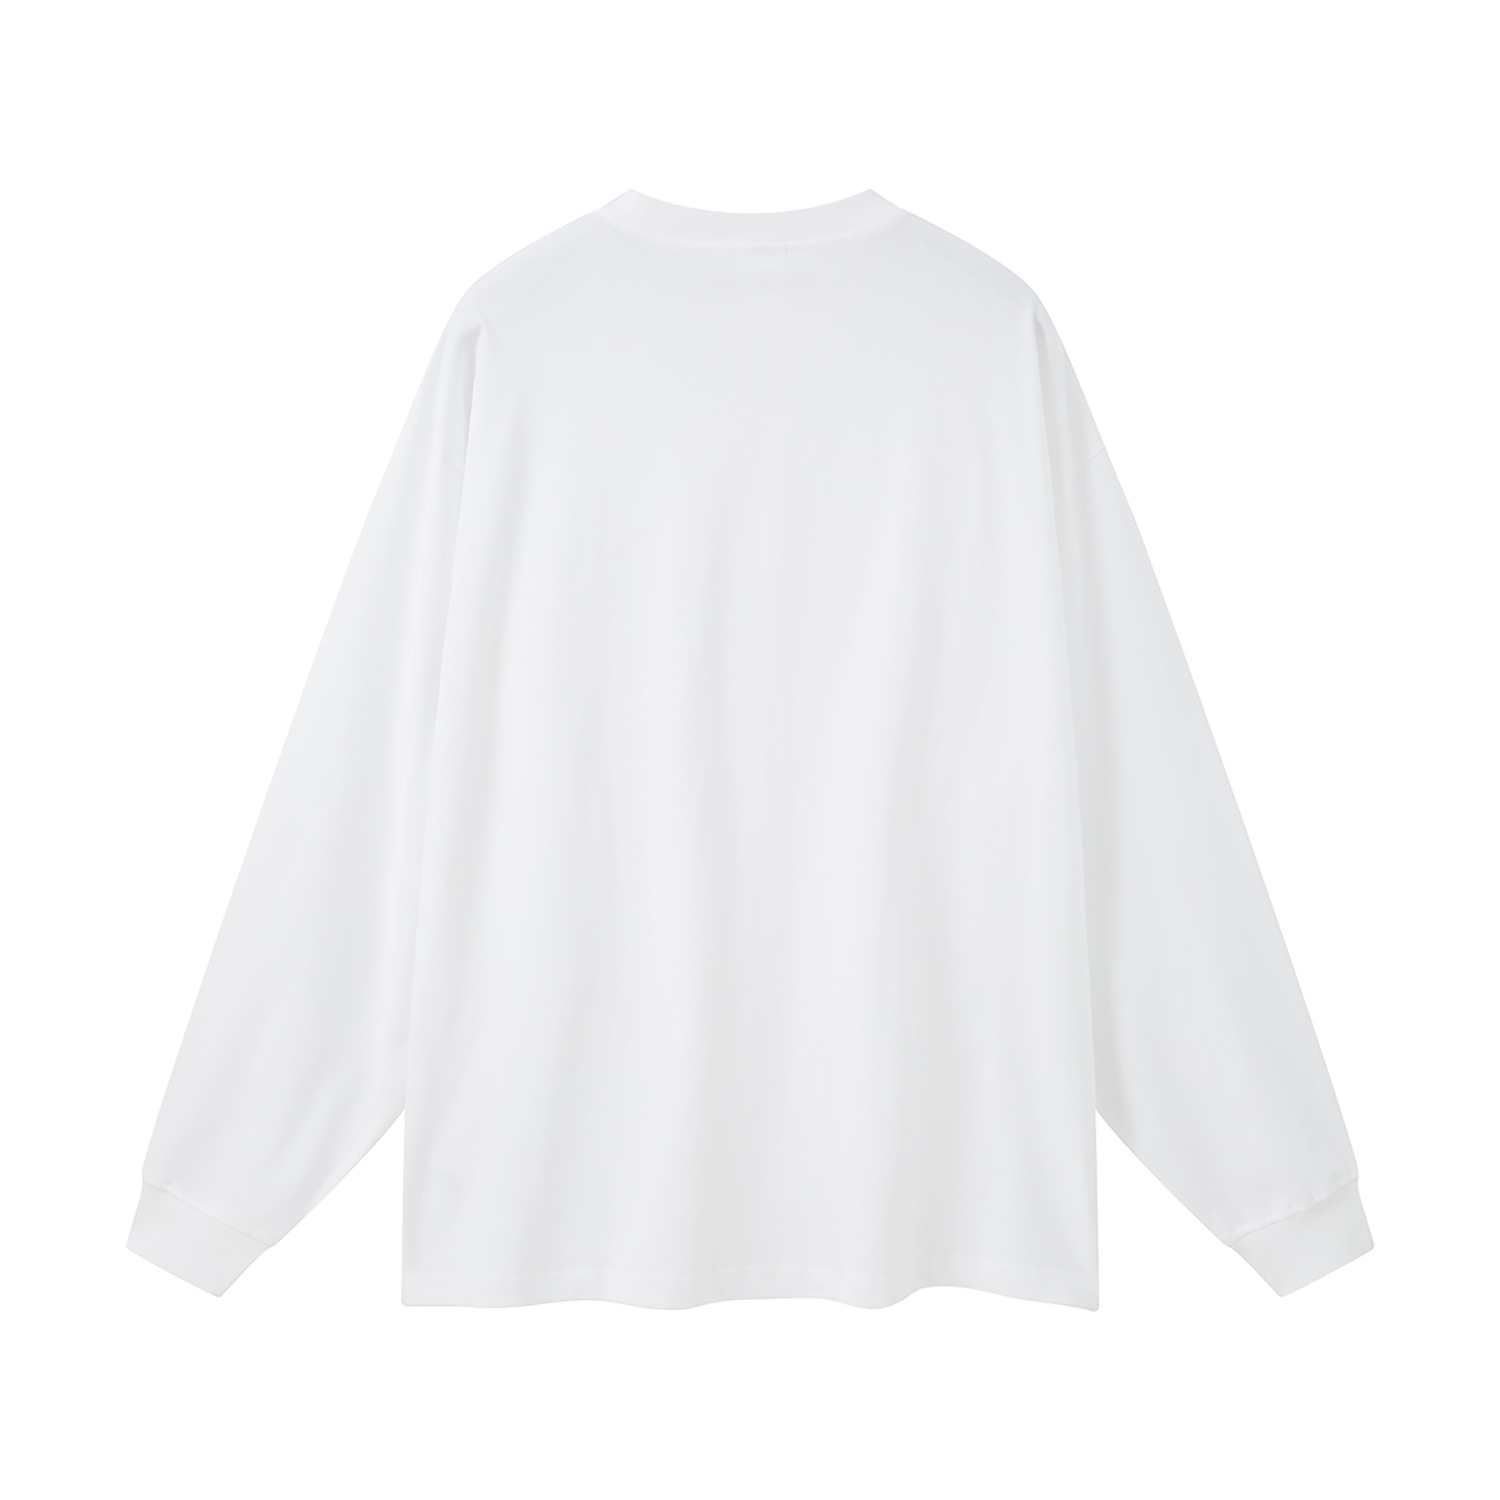 Streetwear 305g FOG 100% Cotton Long Sleeve Tee-18